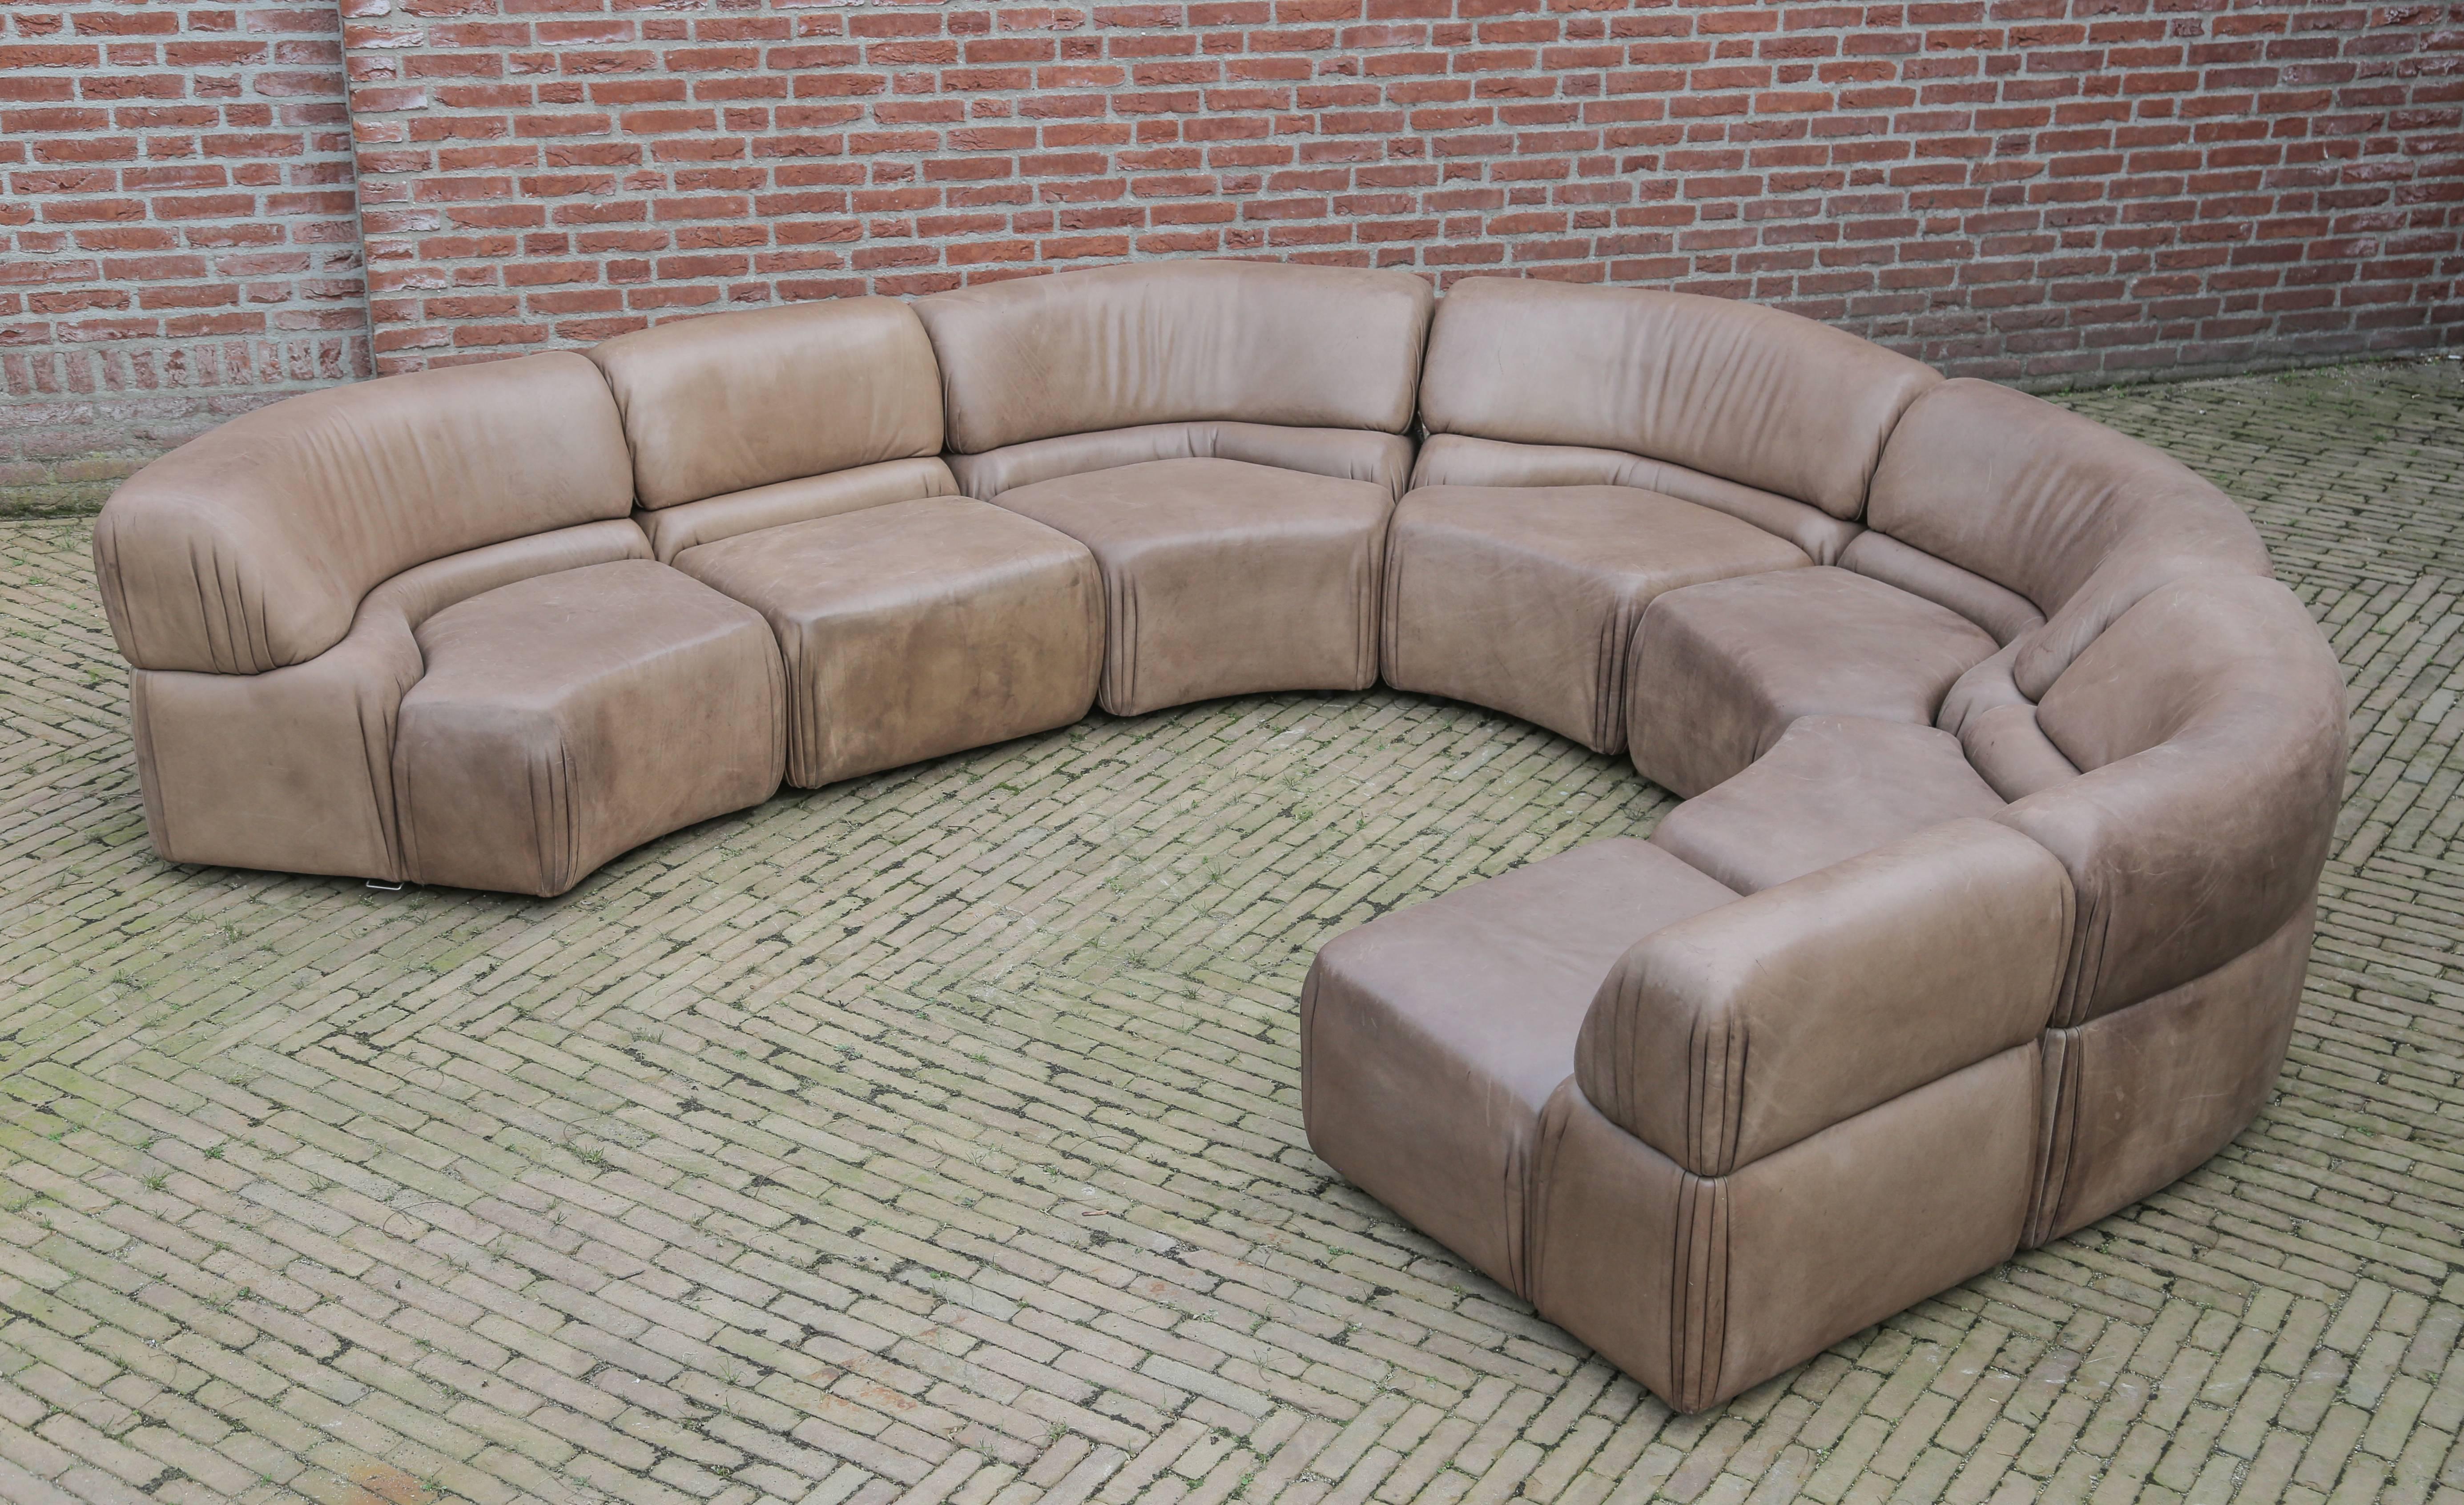 Very Rare De Sede Modular Sofa, Model Cosmos, 1970s In Good Condition For Sale In Oisterwijk, NL